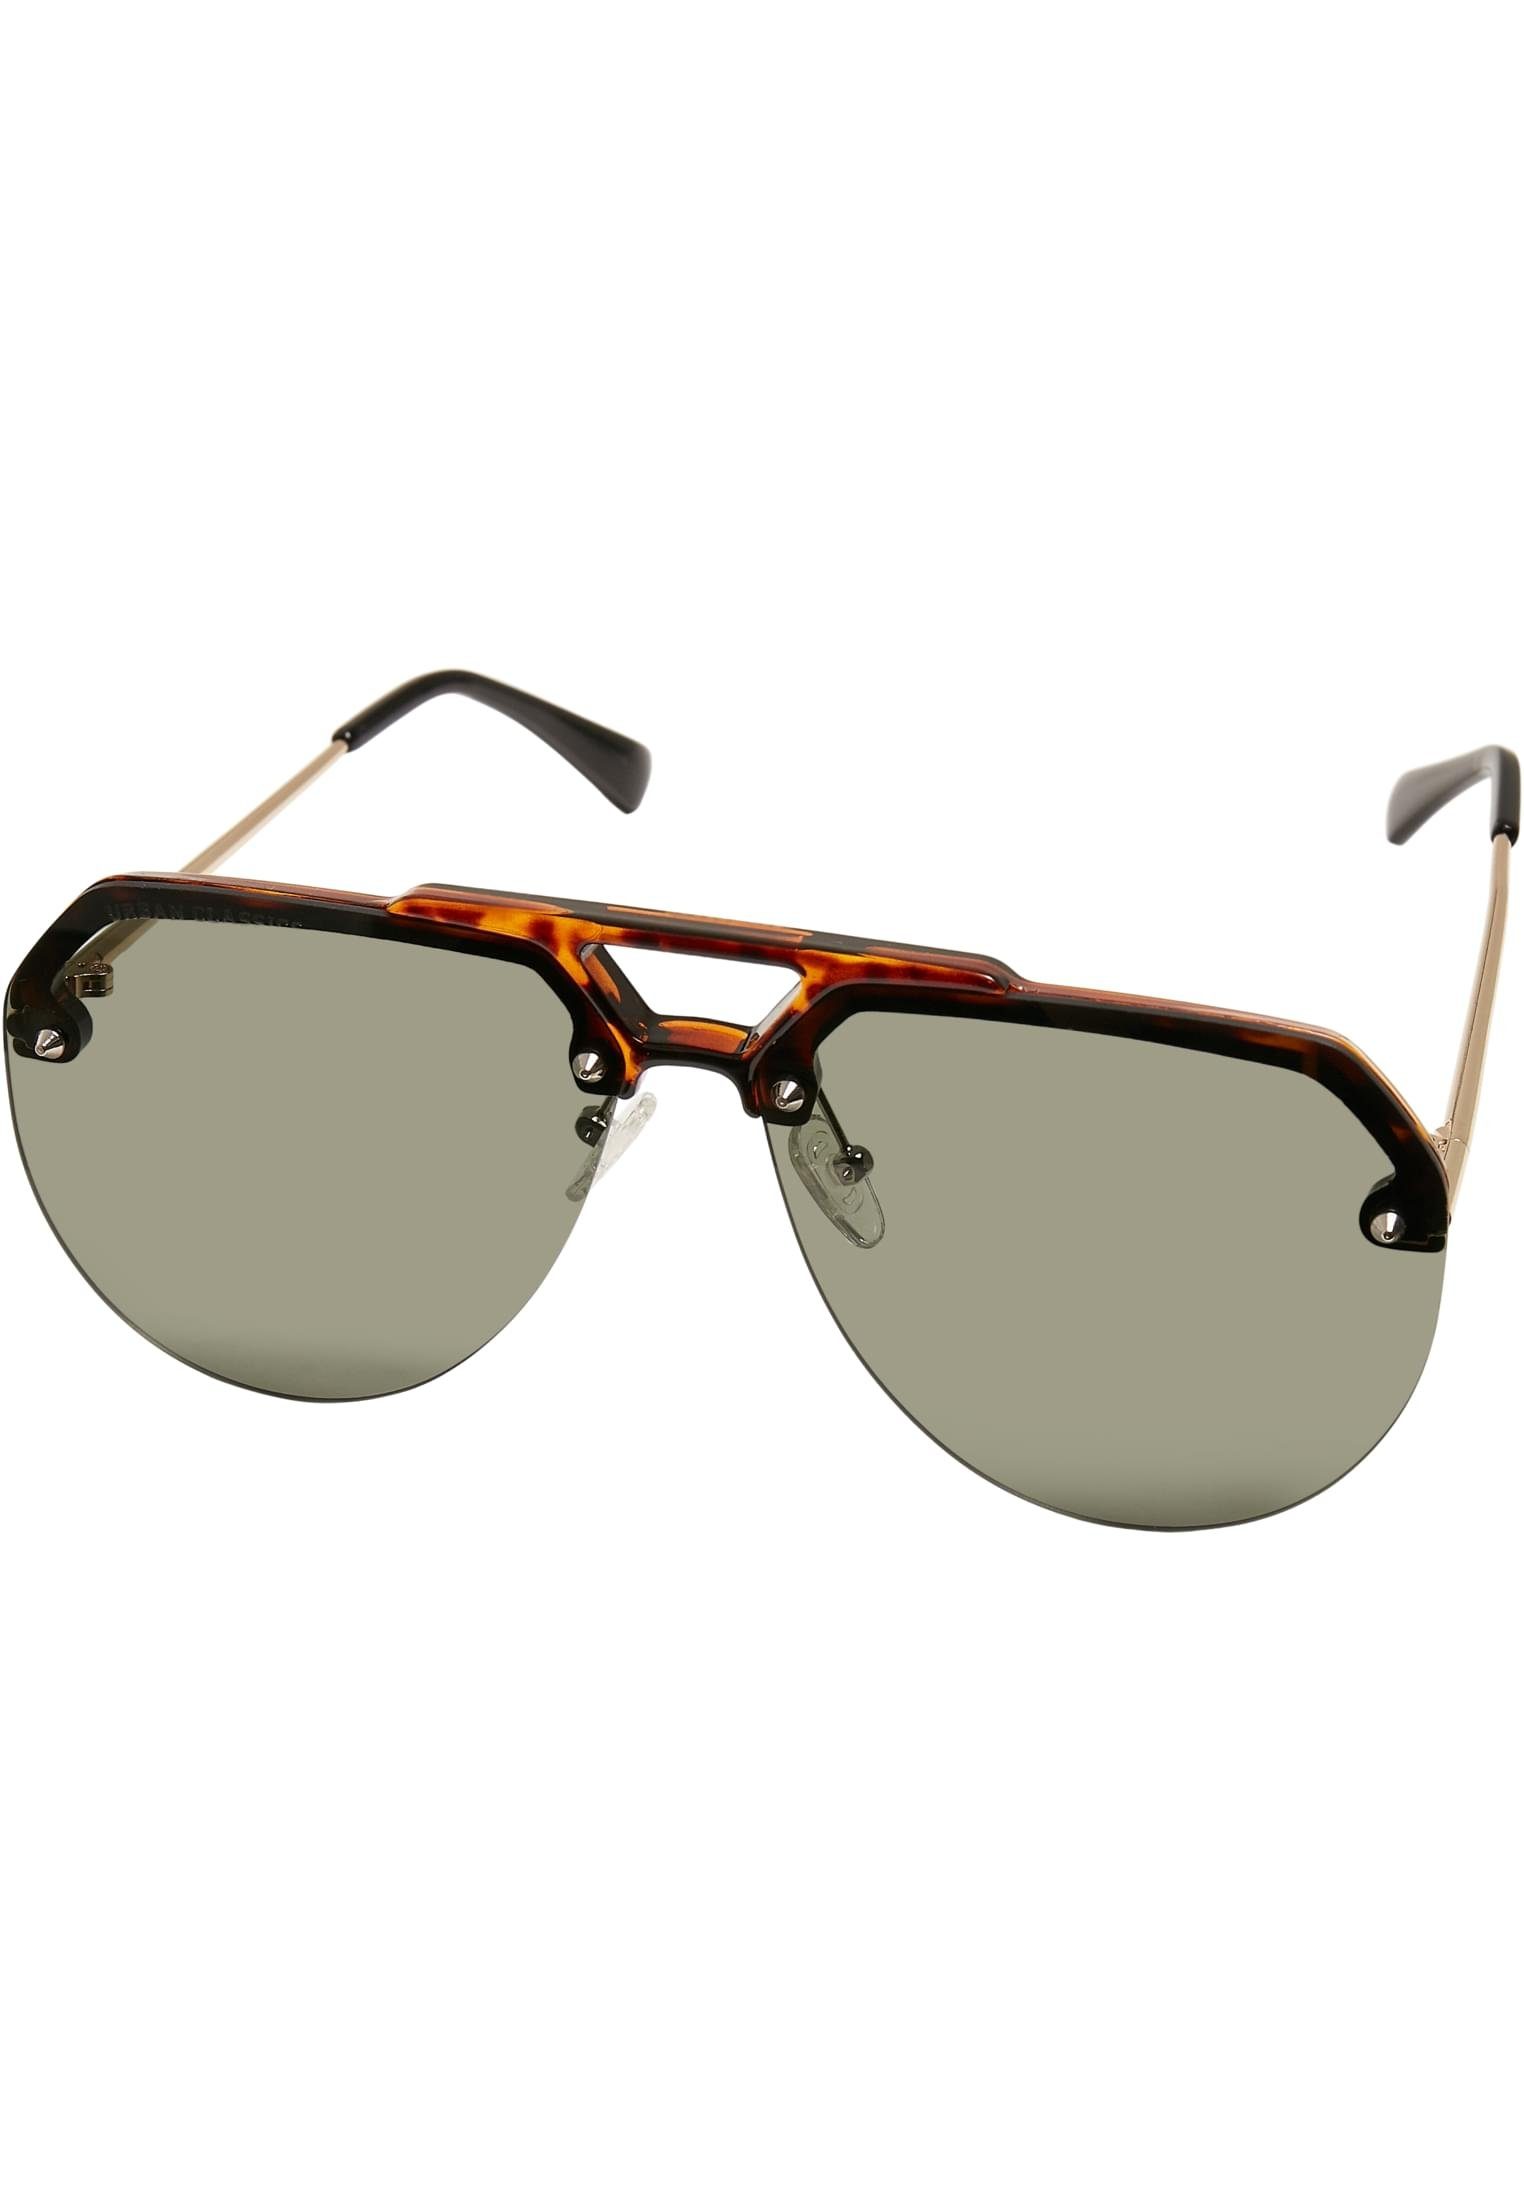 Sunglasses Sonnenbrille Toronto CLASSICS URBAN Unisex amber